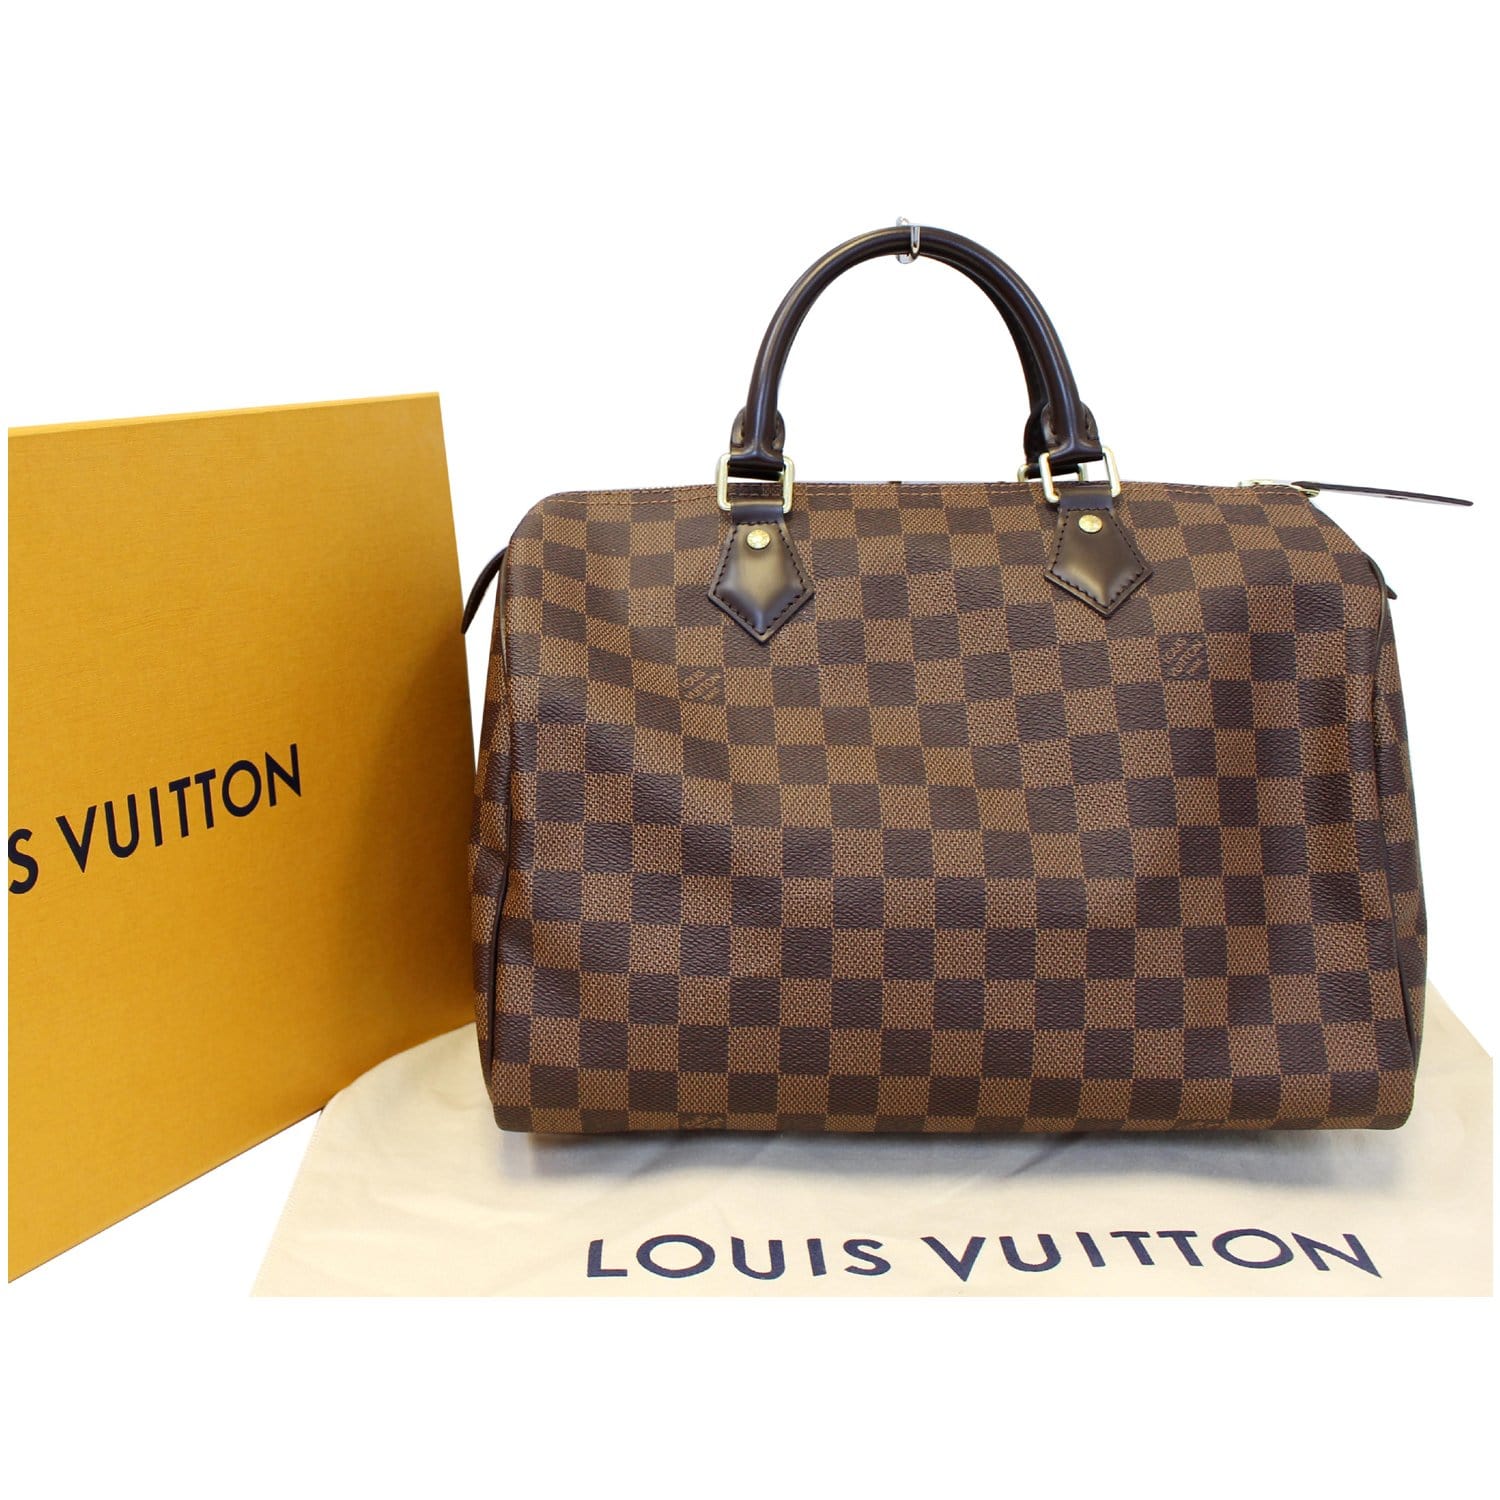 New Year Deal - LOUIS VUITTON Speedy 30 Damier Ebene Satchel Bag Brown - Sac  à main Louis Vuitton Speedy 35 en cuir épi bleu